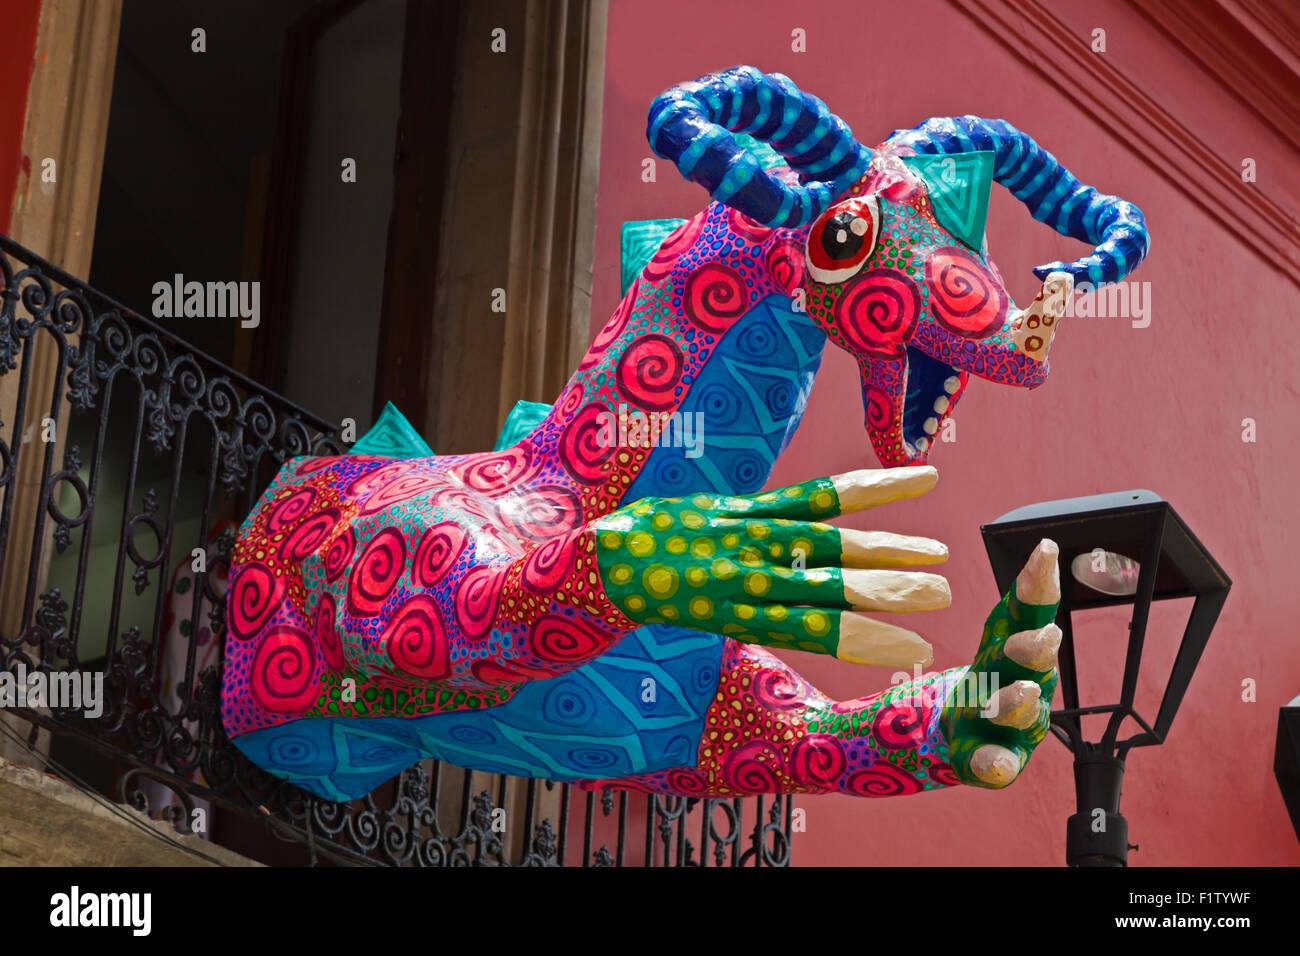 FANTASY ANIMAL paper mache figures as street art - OAXACA, MEXICO Stock Photo